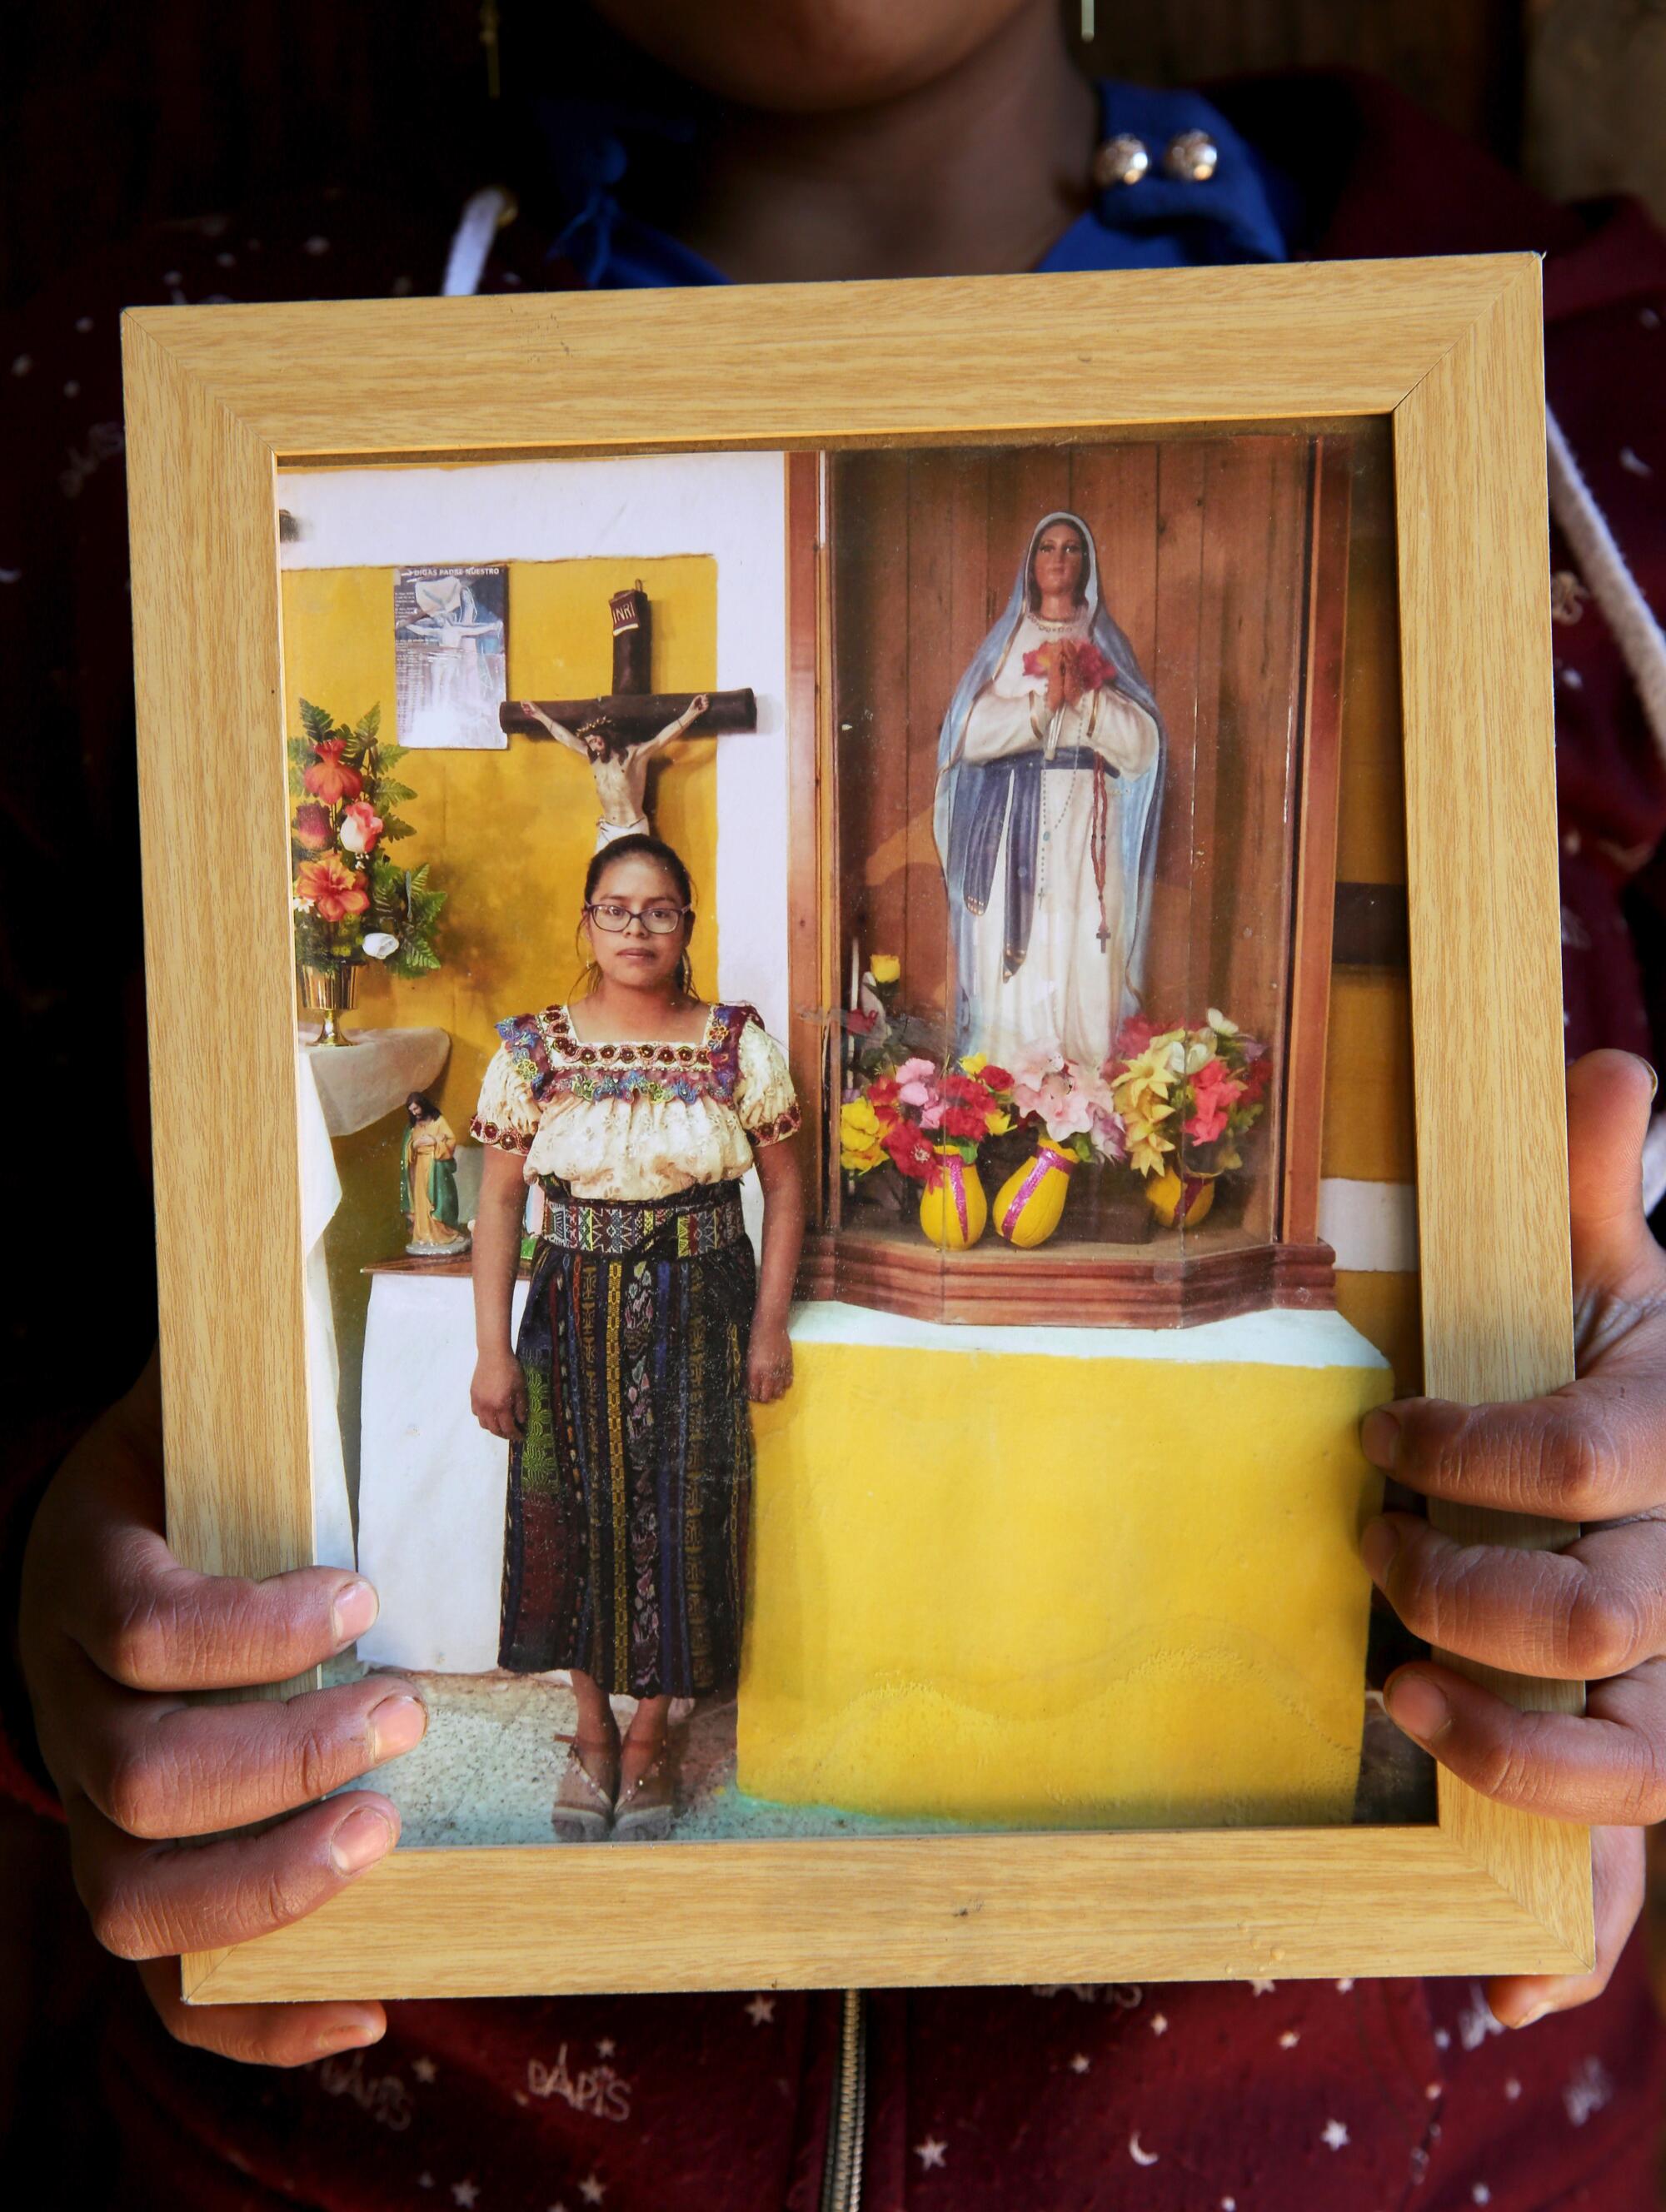 Portrait of Blanca Elizabeth Ramirez Crisostomo, who died at age 23, is held by her sister Glendy Araceli Rami